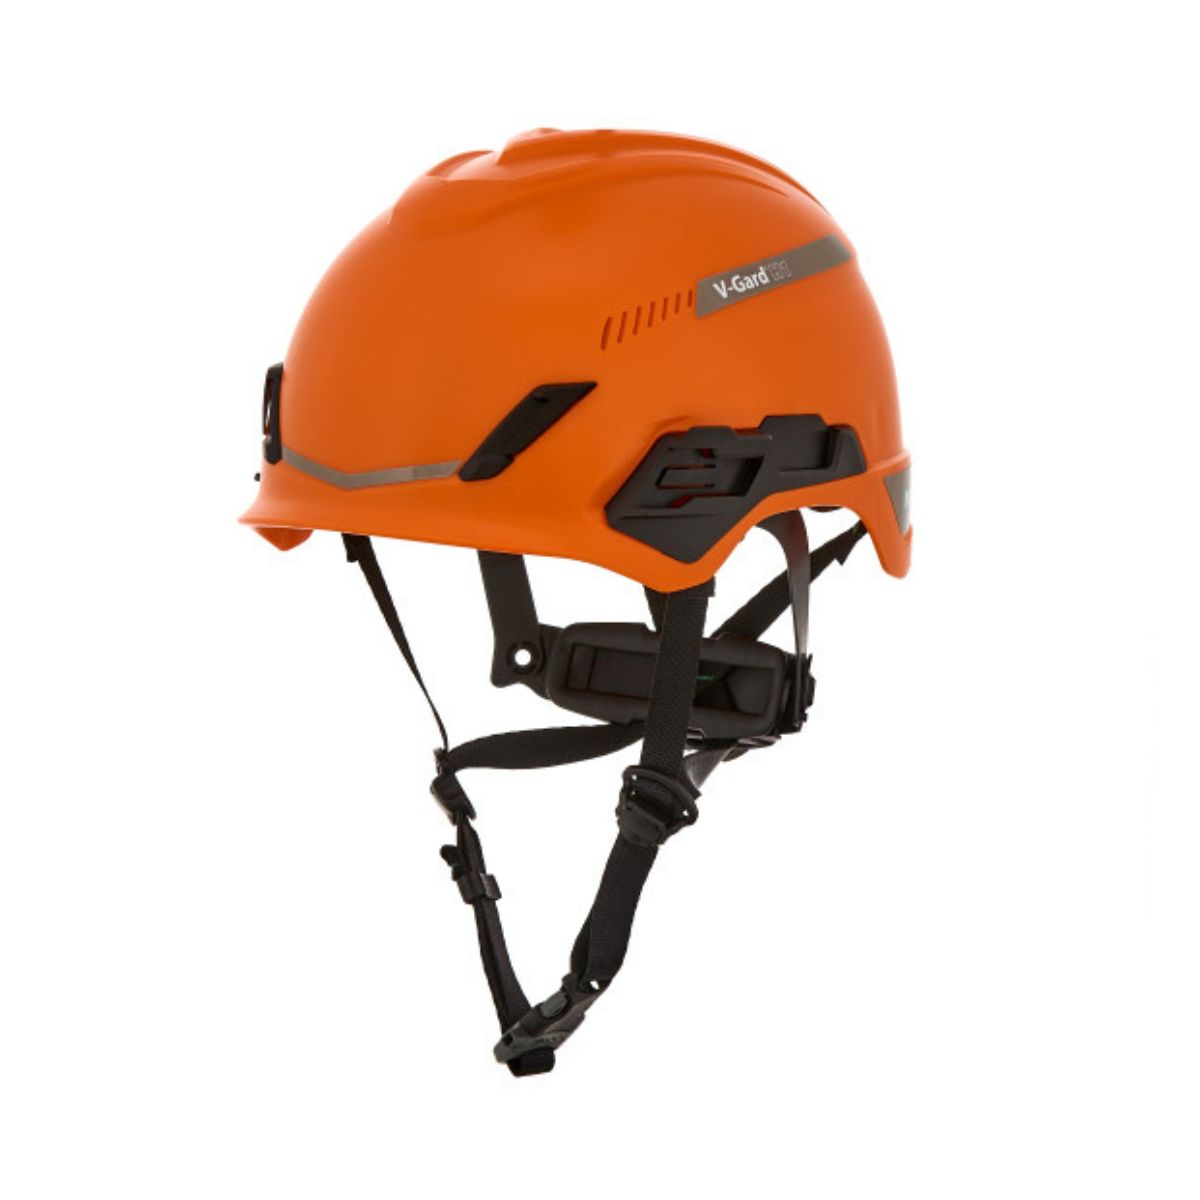 MSA V-Gard H1 Fas-Trac® III Safety Helmet Trivent